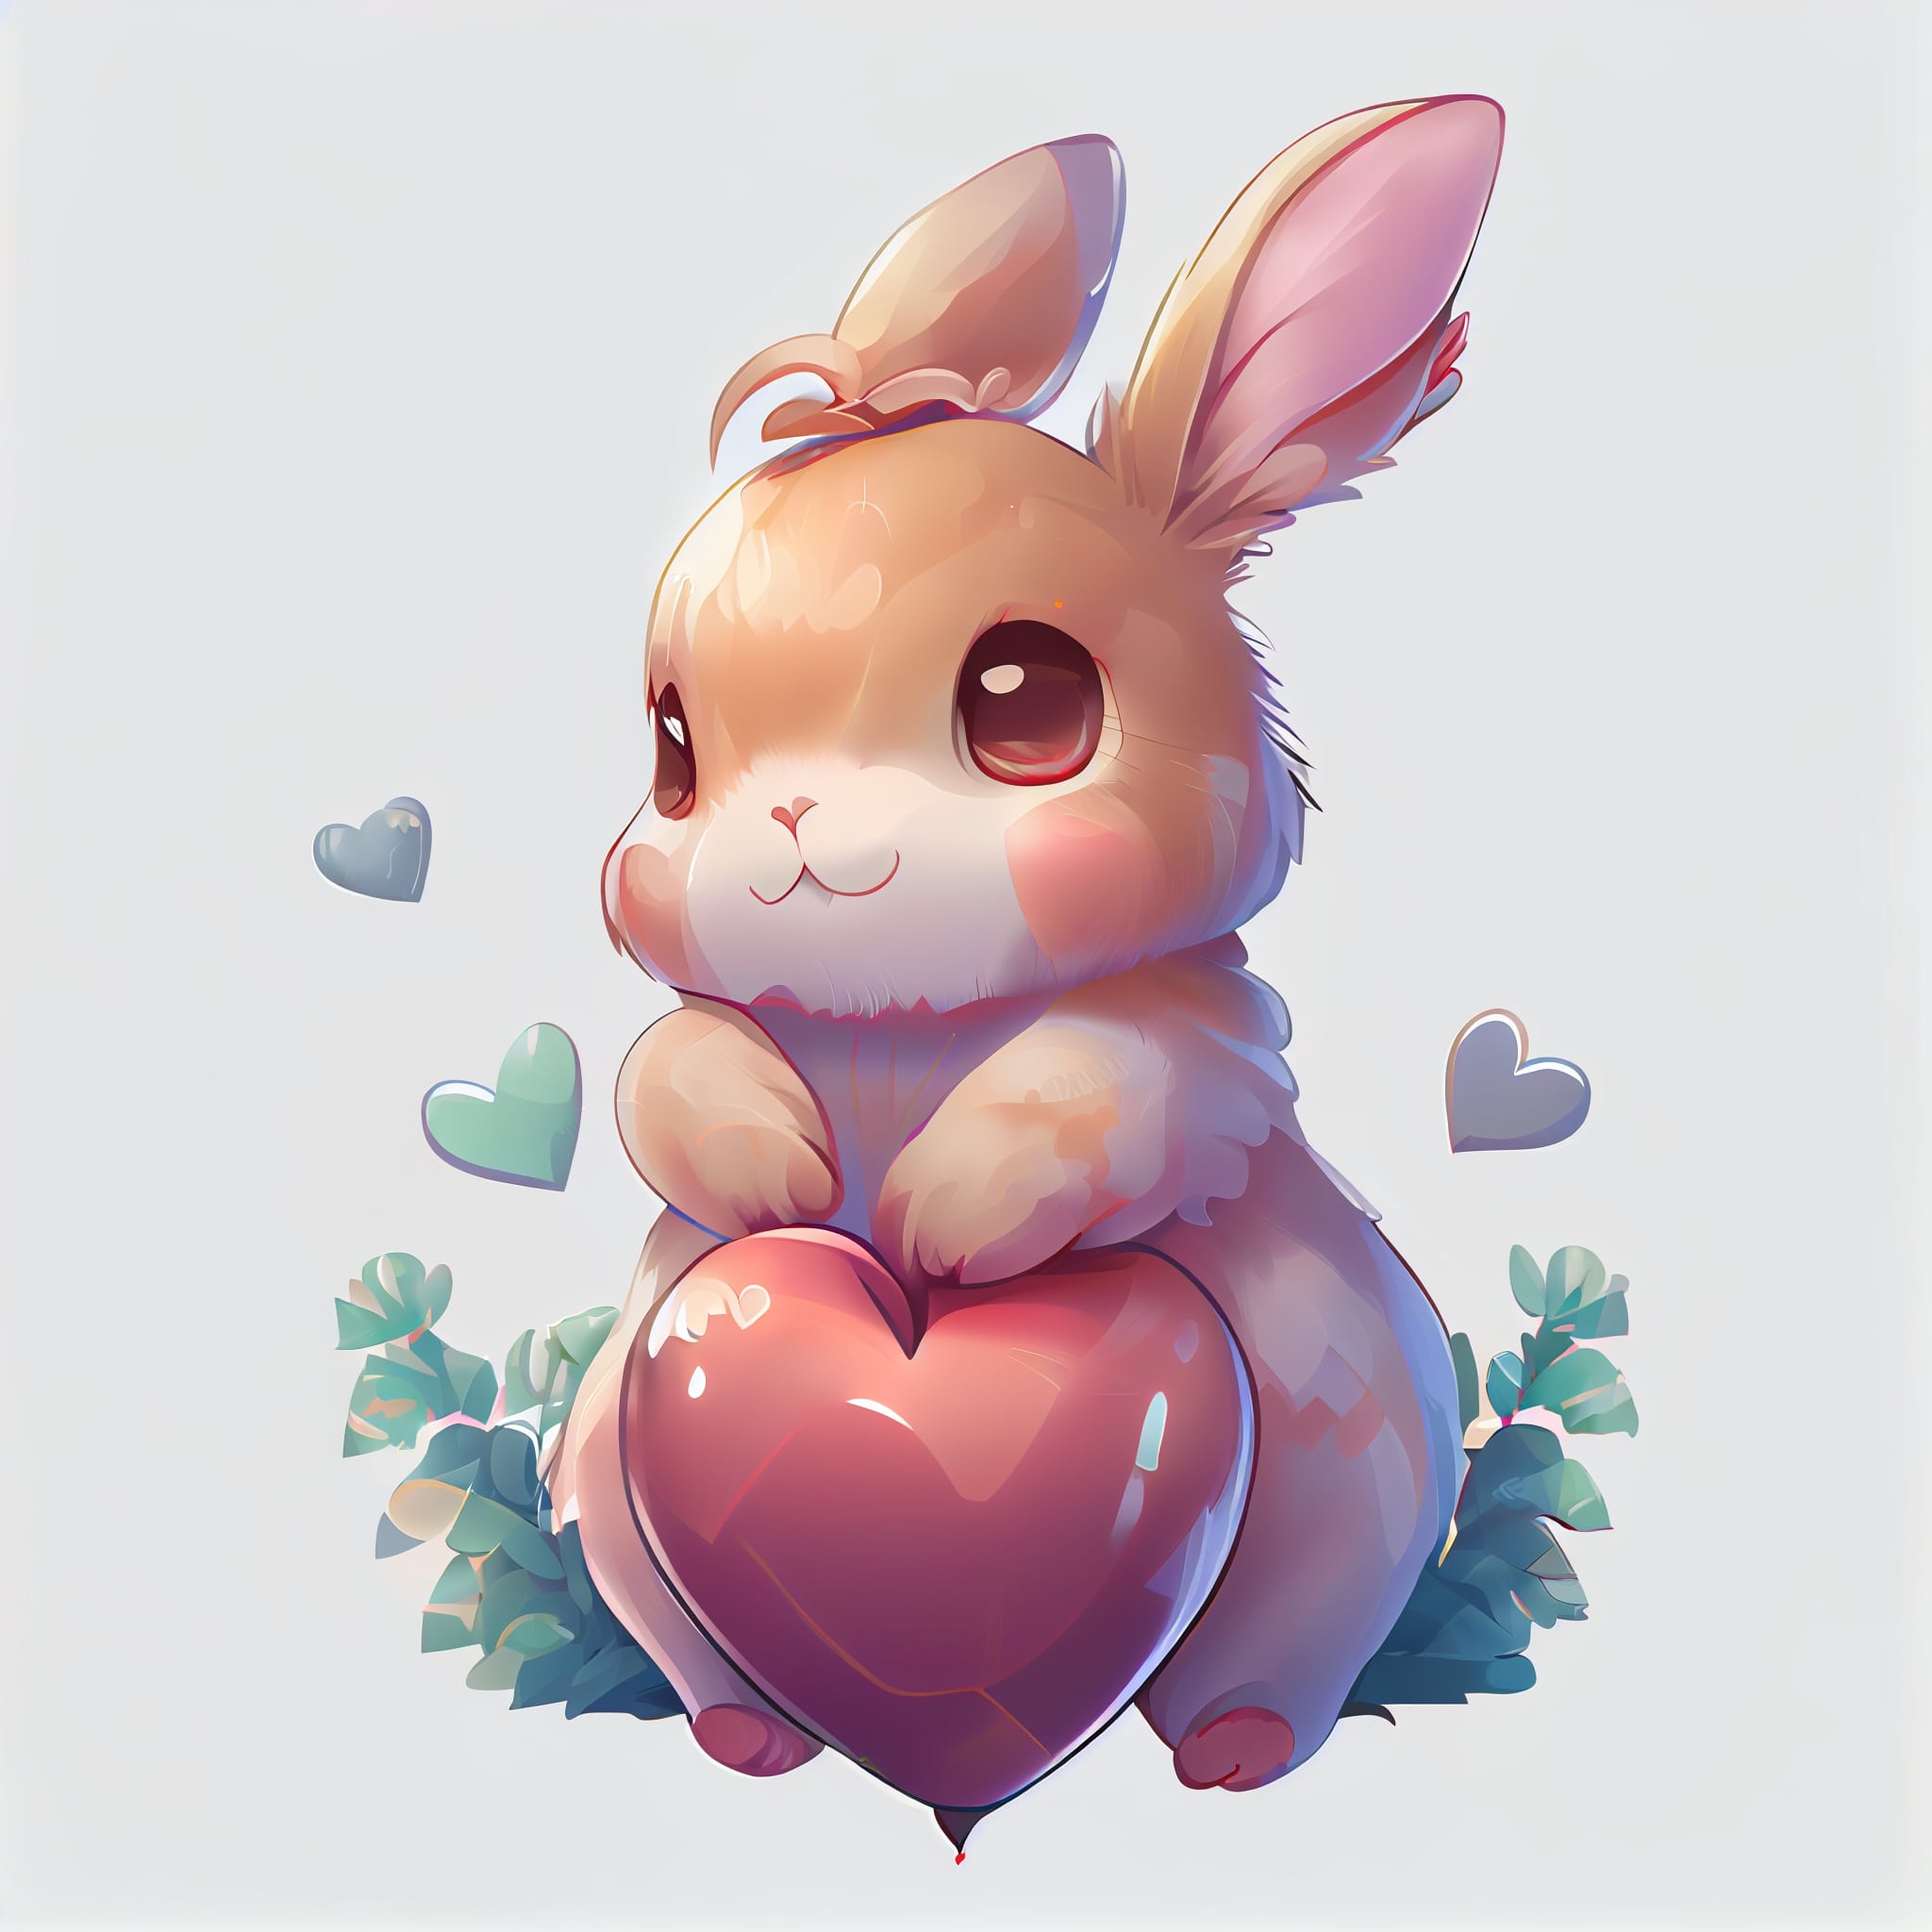 Cute little bunny holding a big heart.